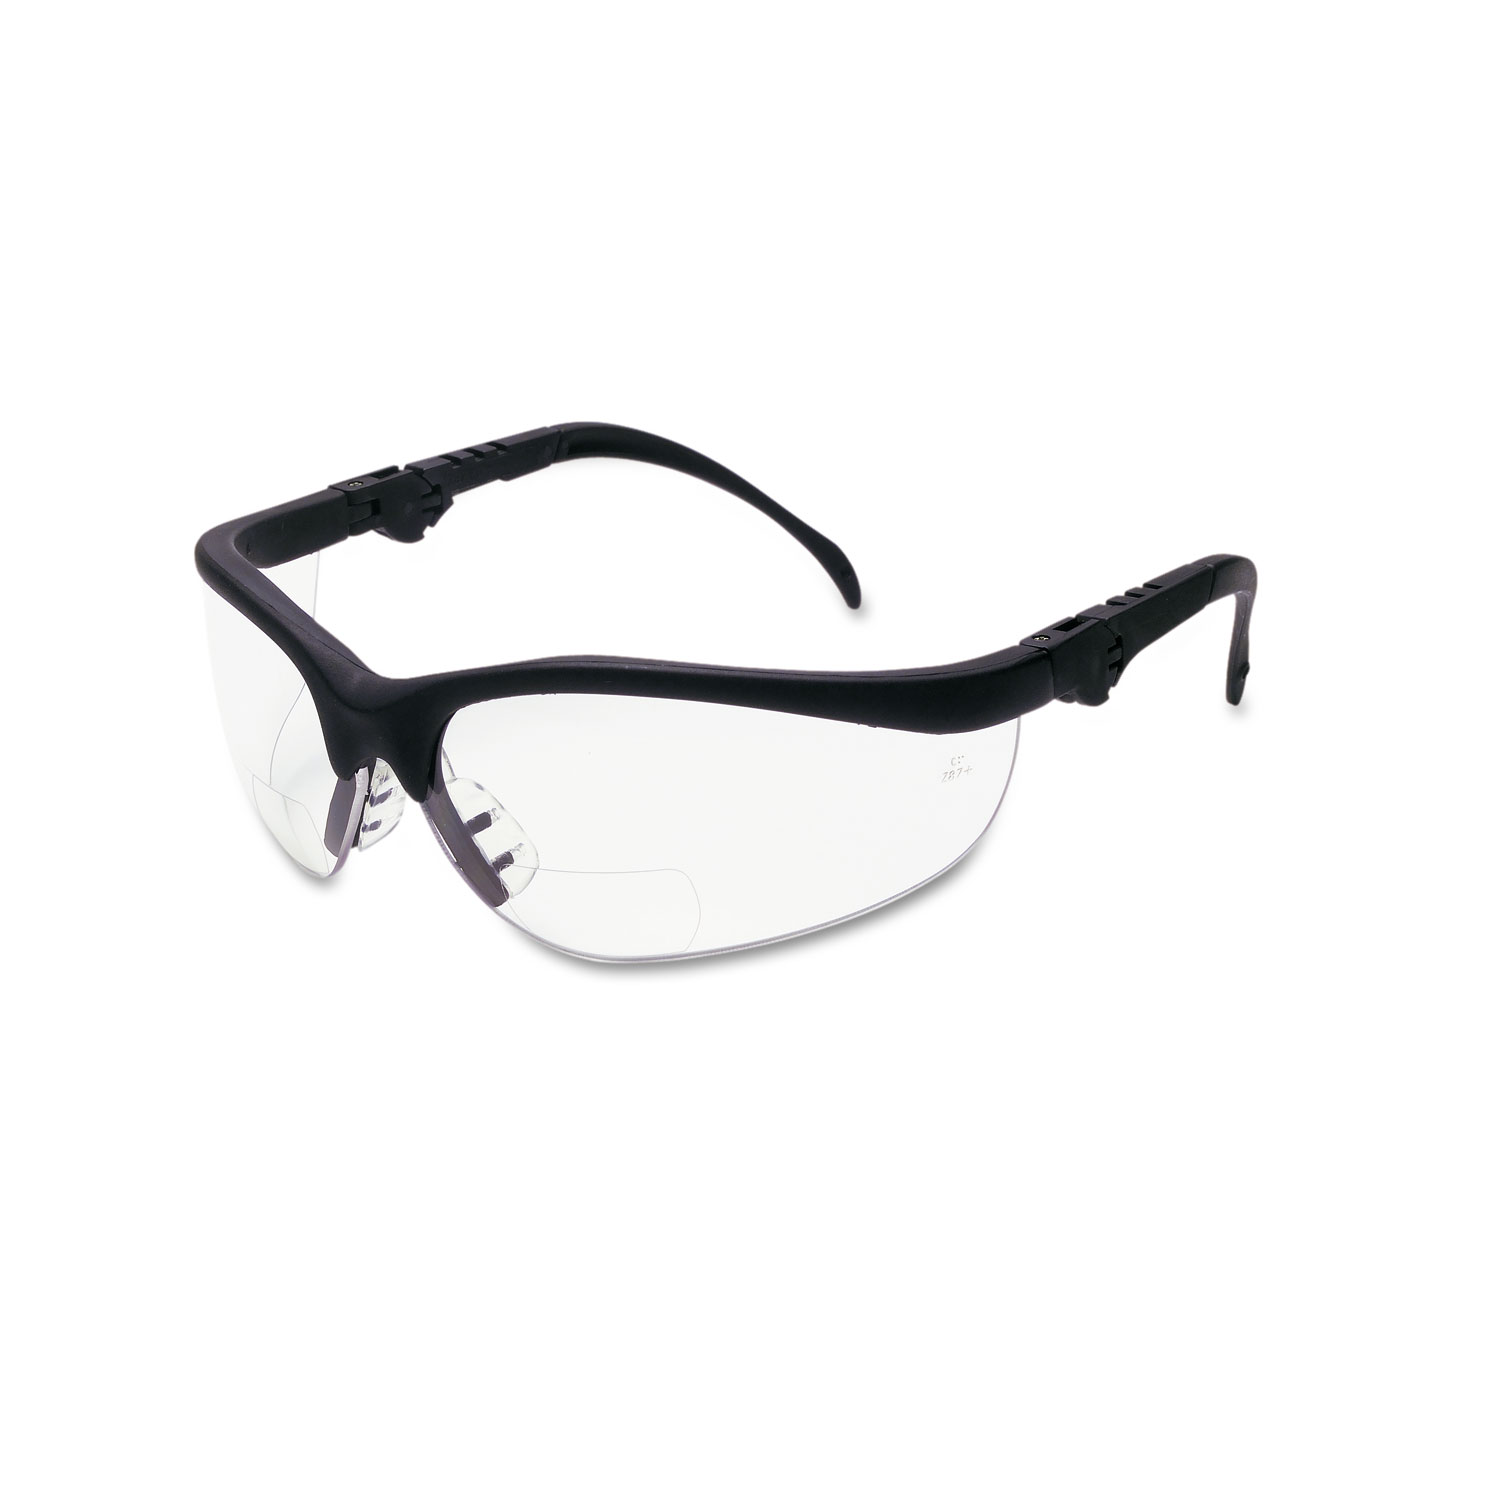 Klondike Magnifier Glasses, 2.0 Magnifier, Clear Lens